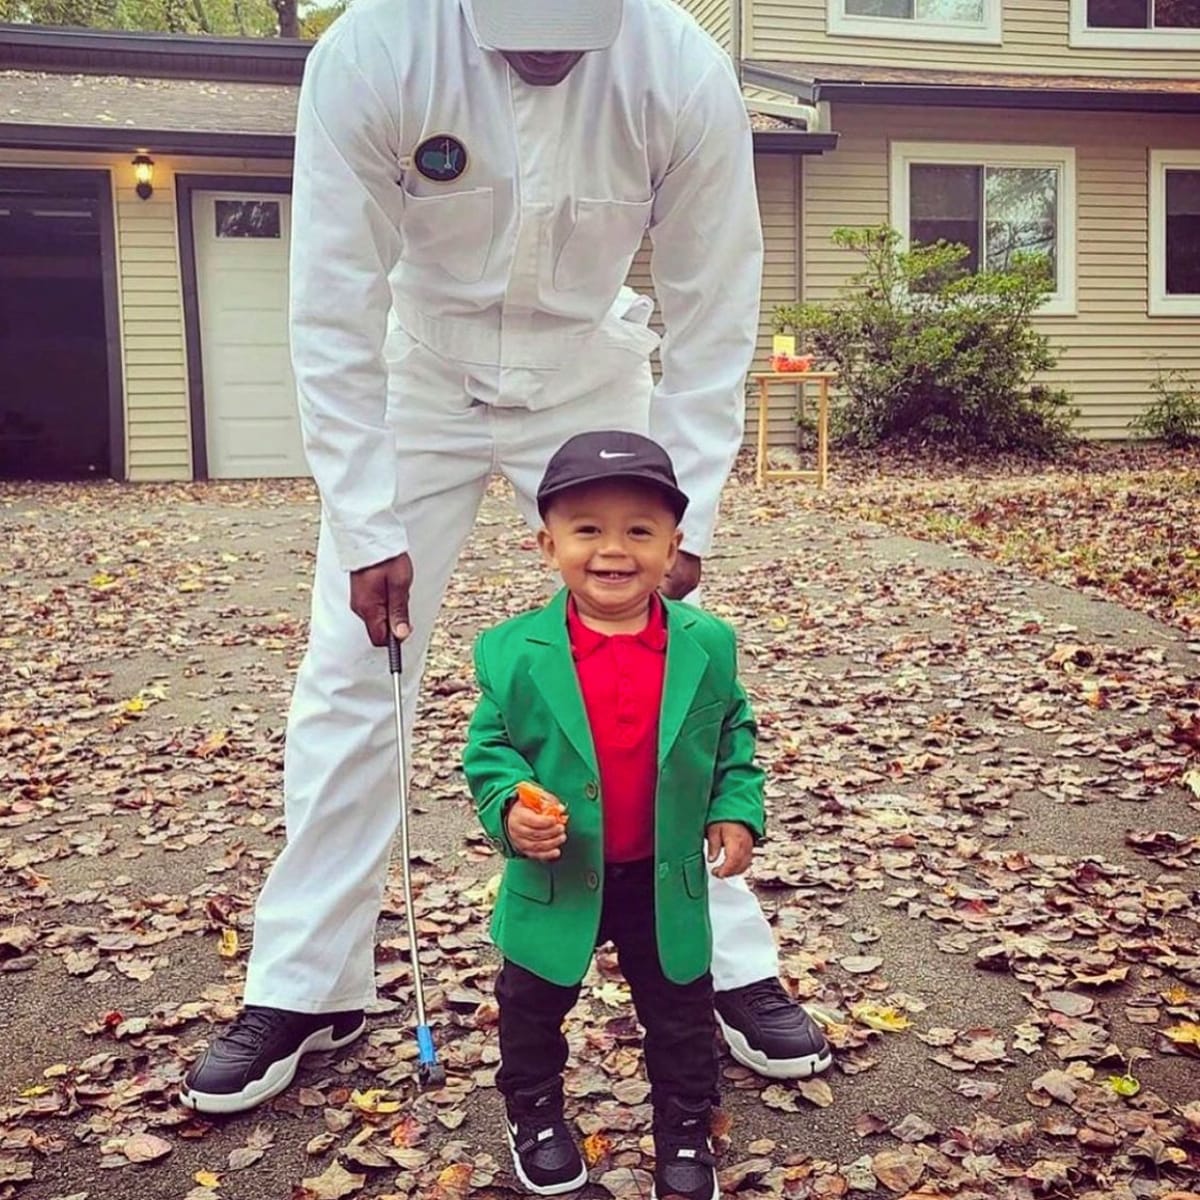 Toddler Tiger Woods Is the Best Golf Halloween Costume We've Seen